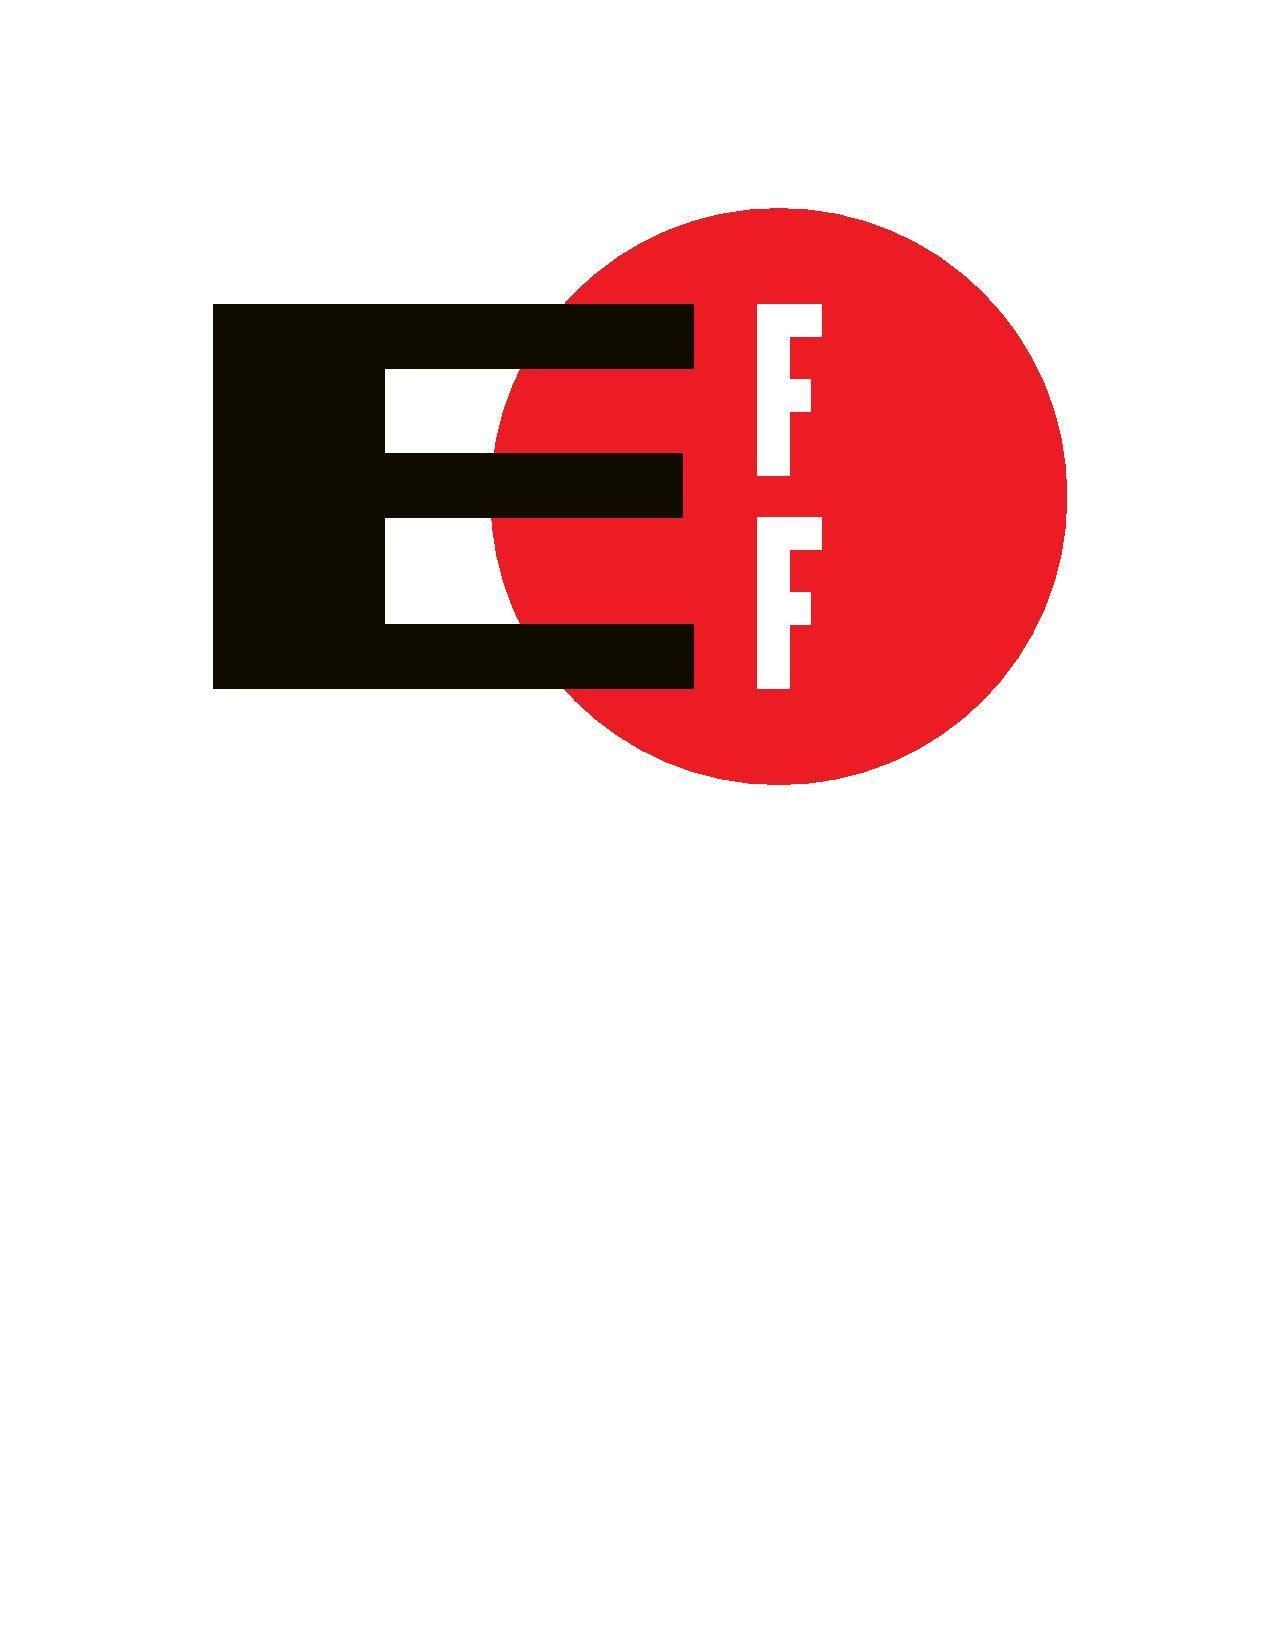 Eff Logo - File:EFF-logo-plain.pdf - Wikimedia Commons